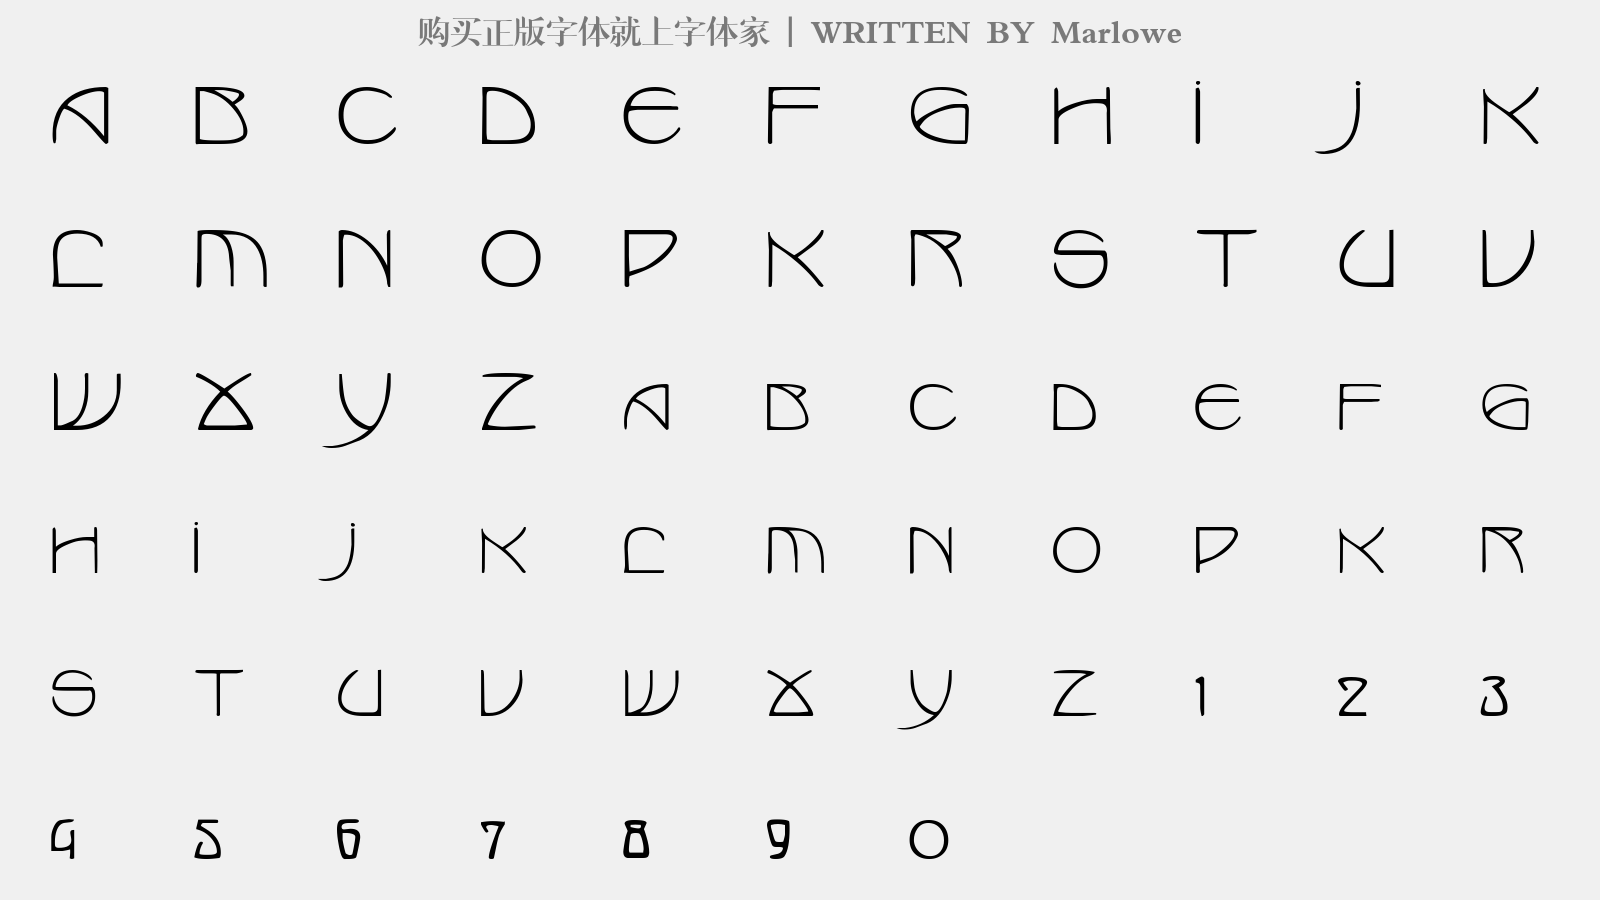 Marlowe - 大写字母/小写字母/数字